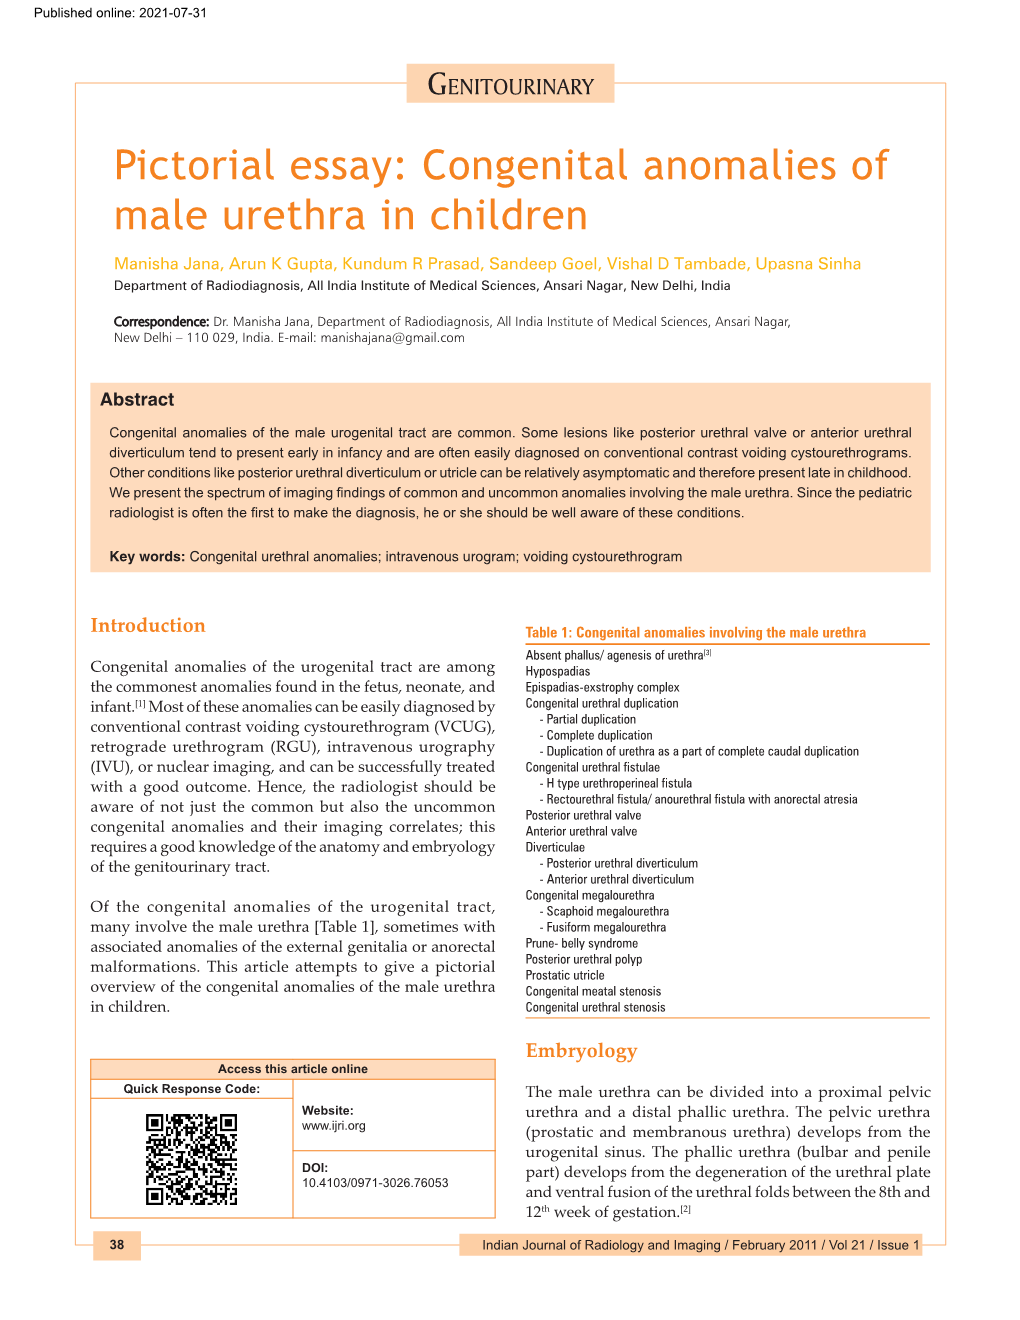 Pictorial Essay: Congenital Anomalies of Male Urethra in Children